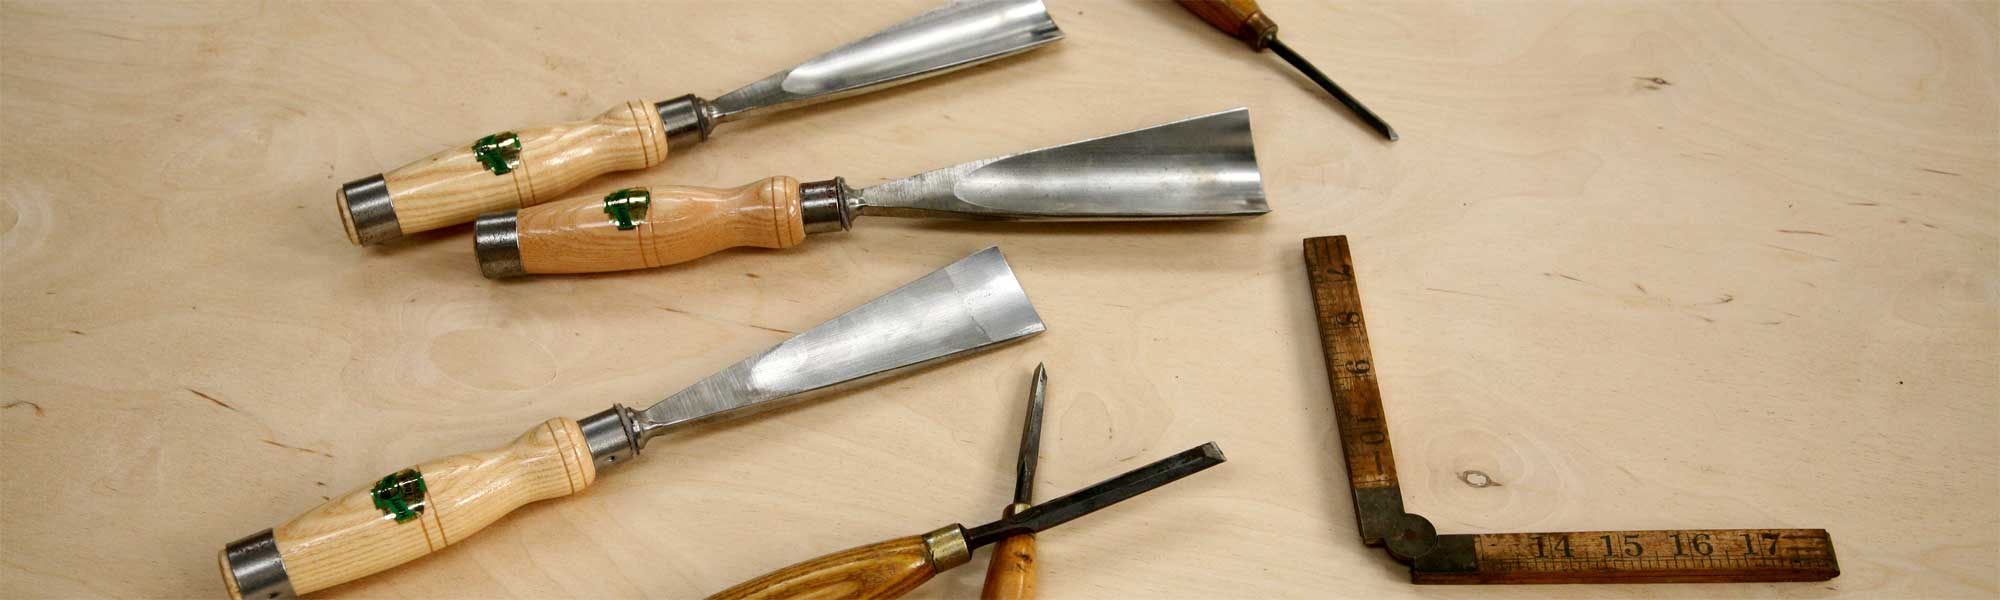 chisels gouges tools